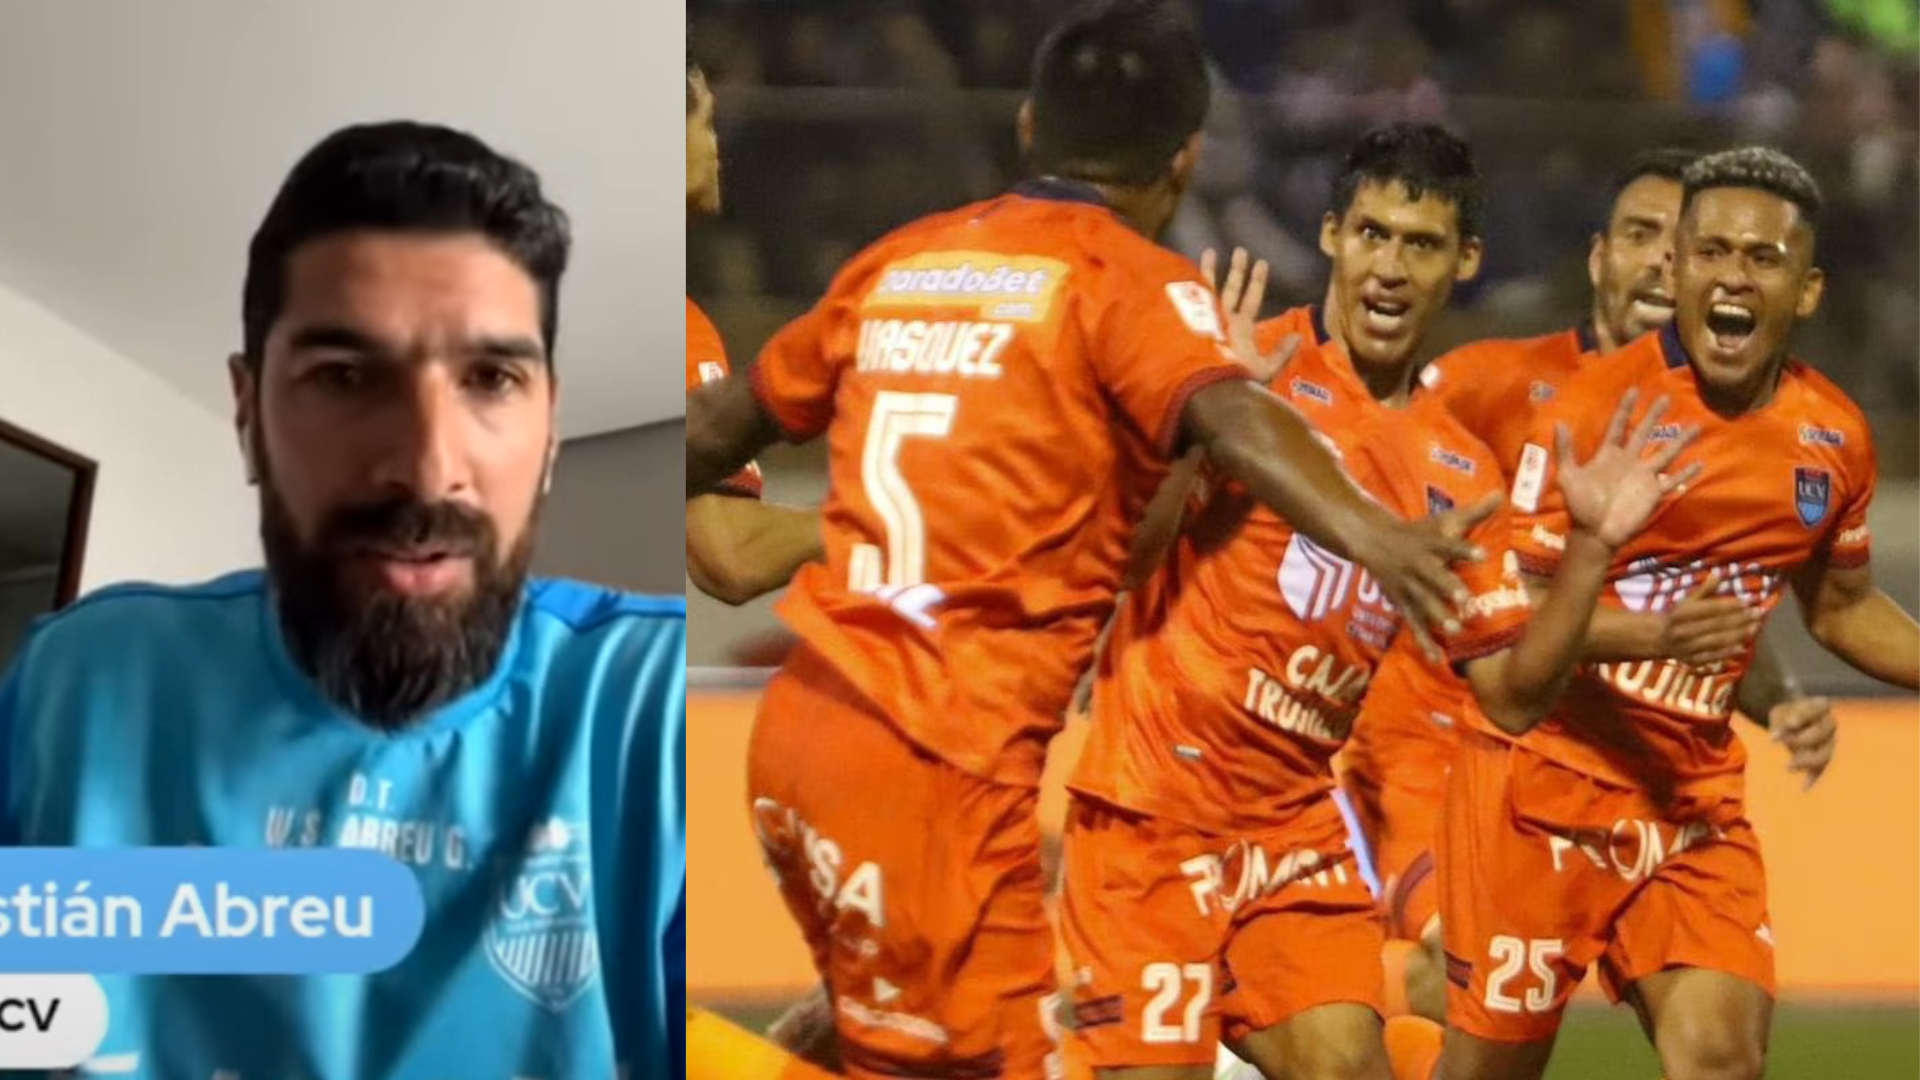 Dura crítica de Sebastián Abreu a directivos del fútbol peruano: “Dirigentes retrógradas”